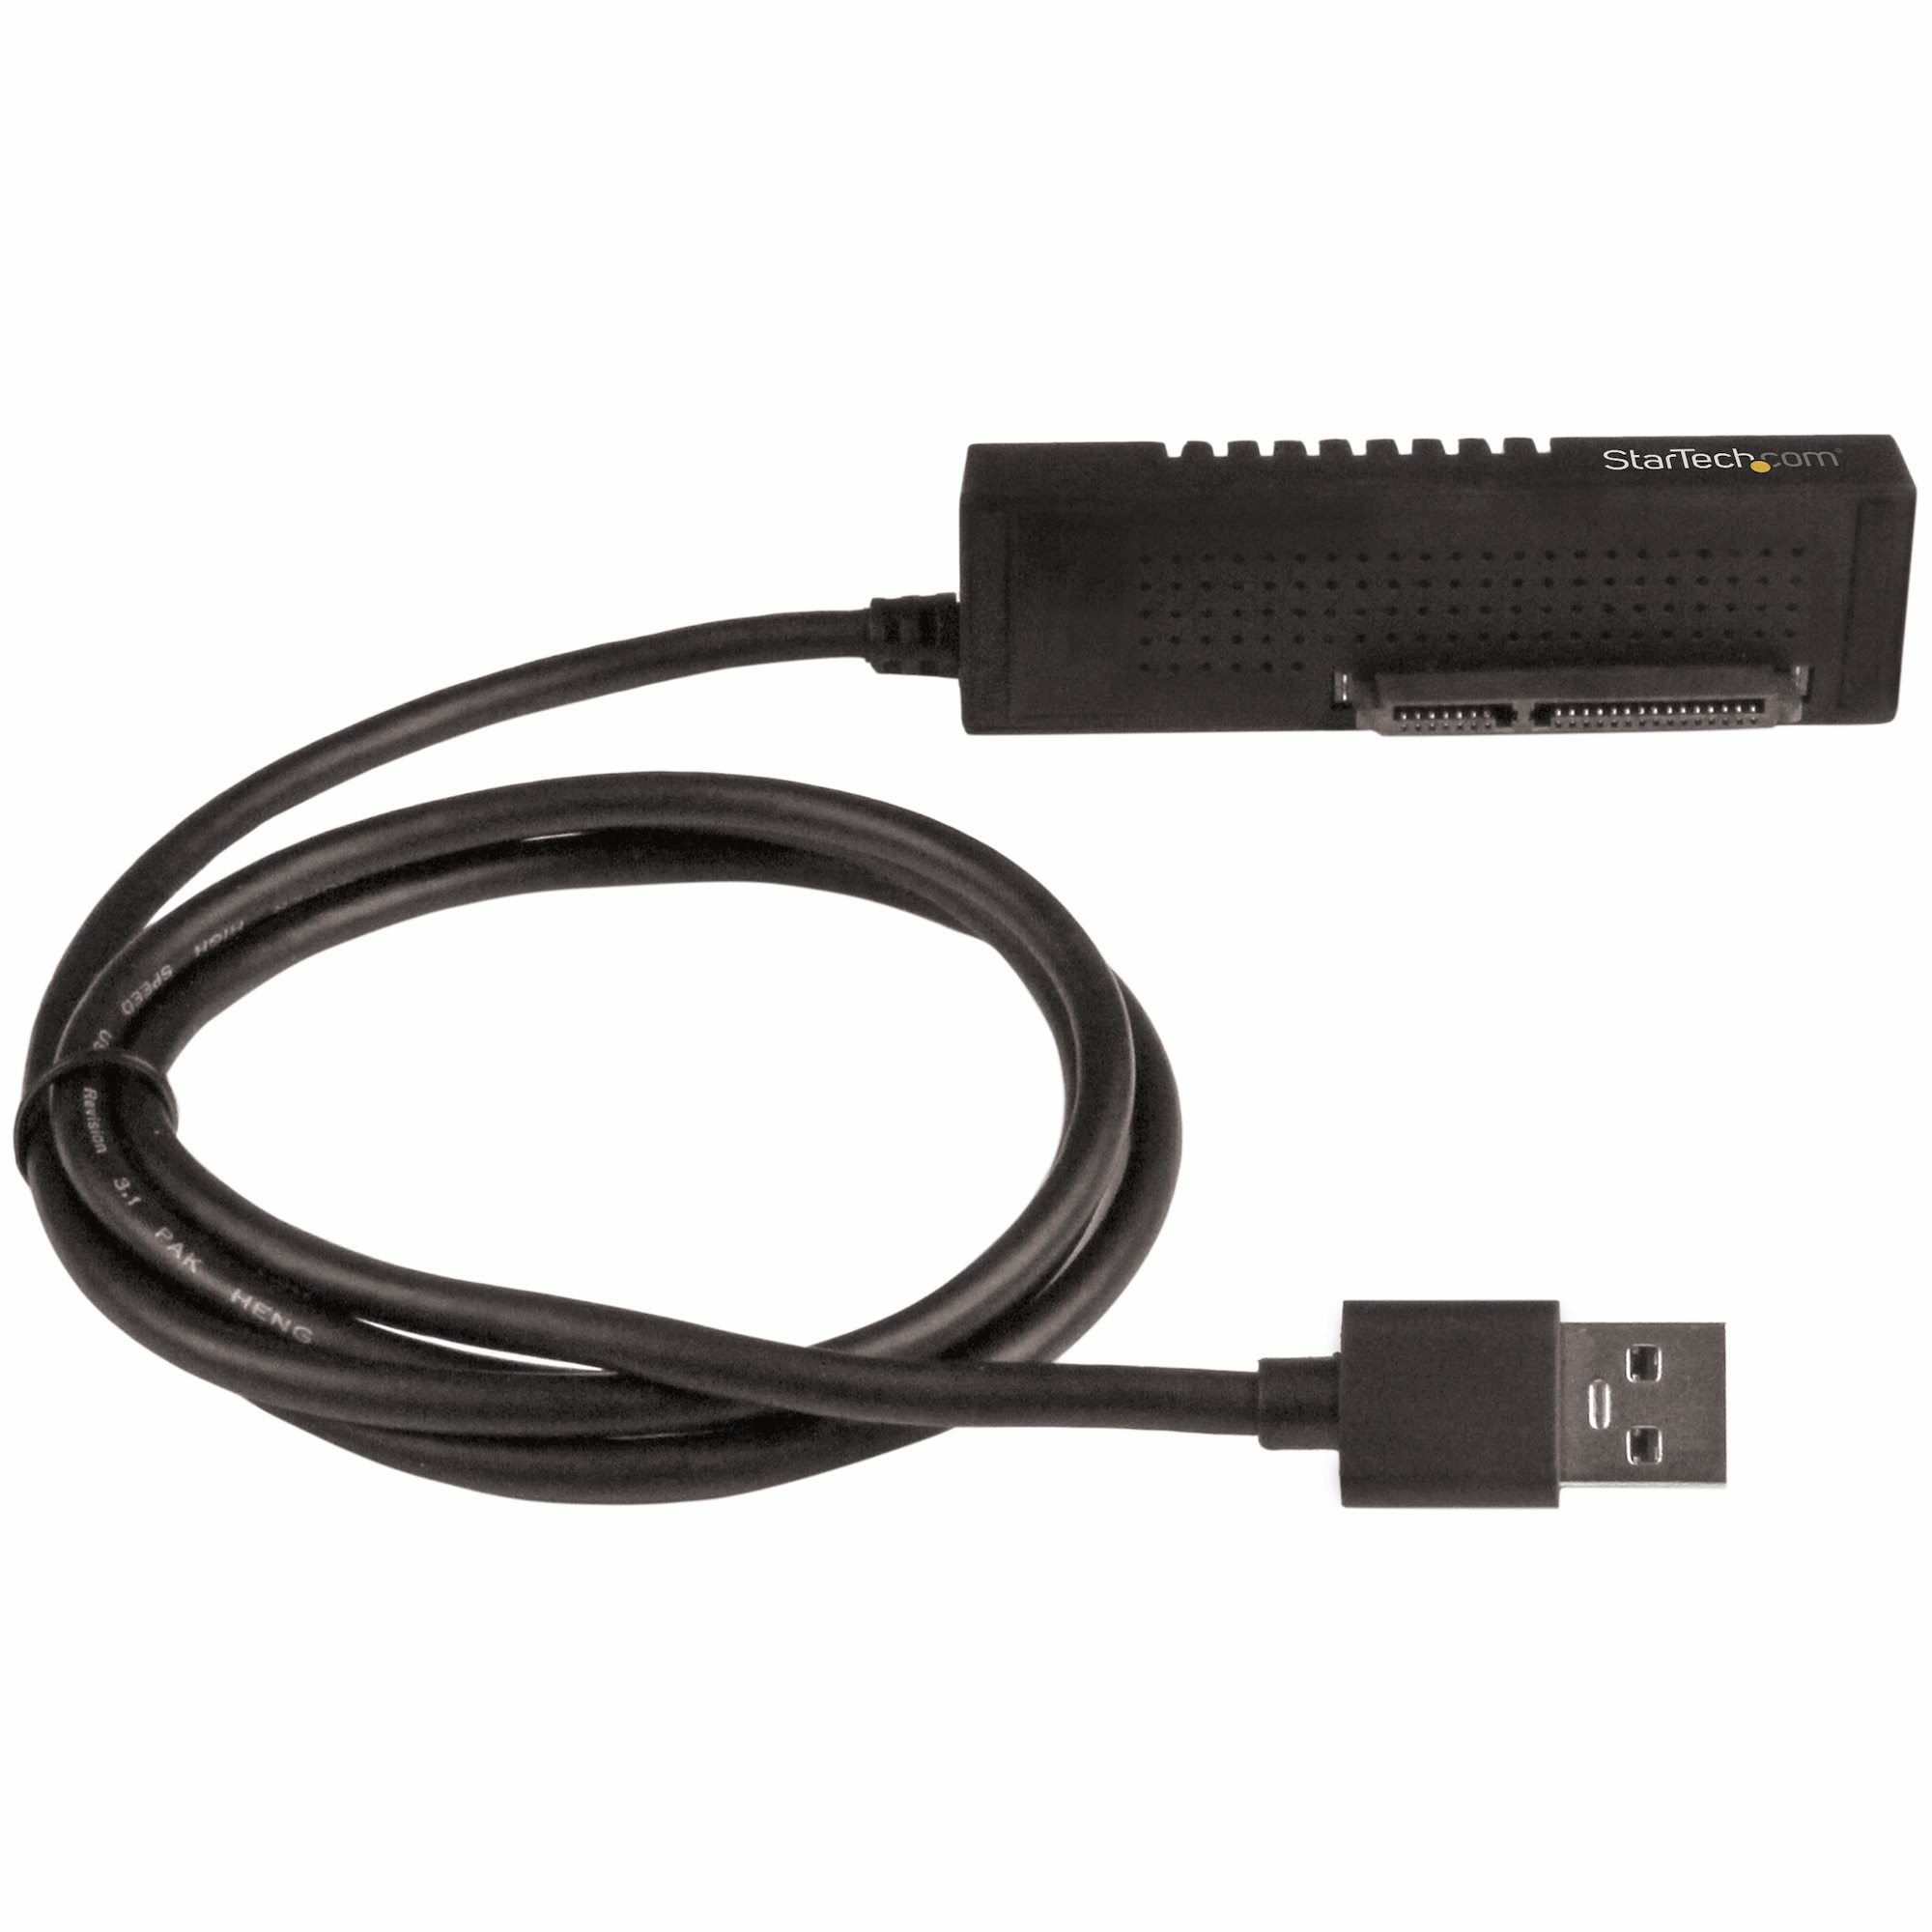 【USB312SAT3】SATA TO USB CABLE - USB 3.1 (10G